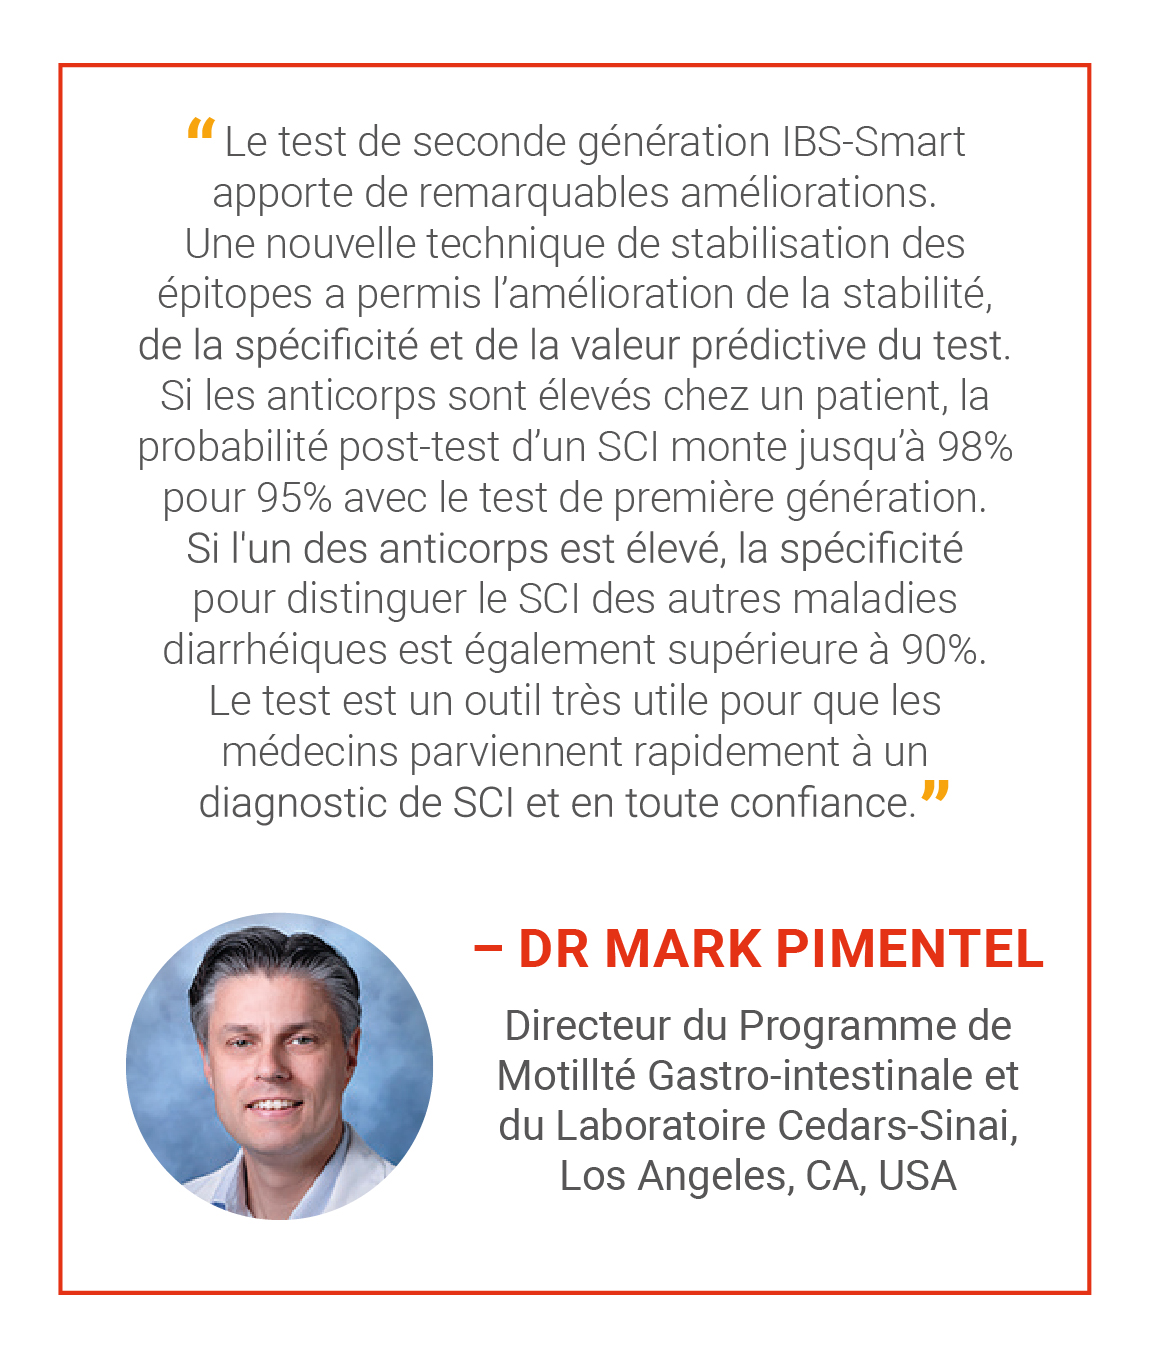 Dr Mark Pimentel